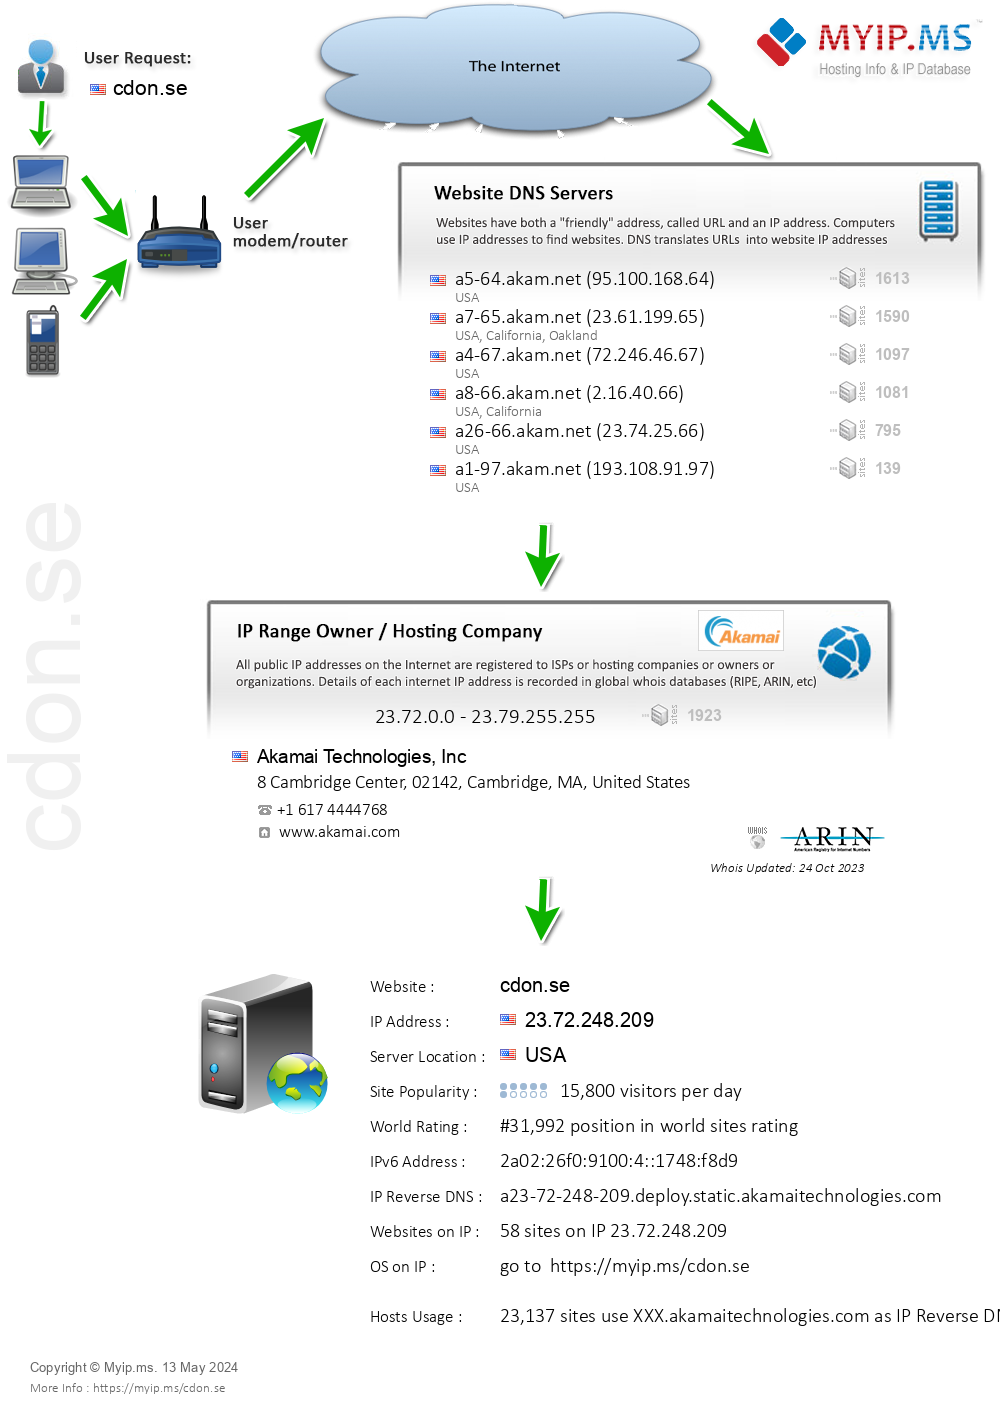 Cdon.se - Website Hosting Visual IP Diagram